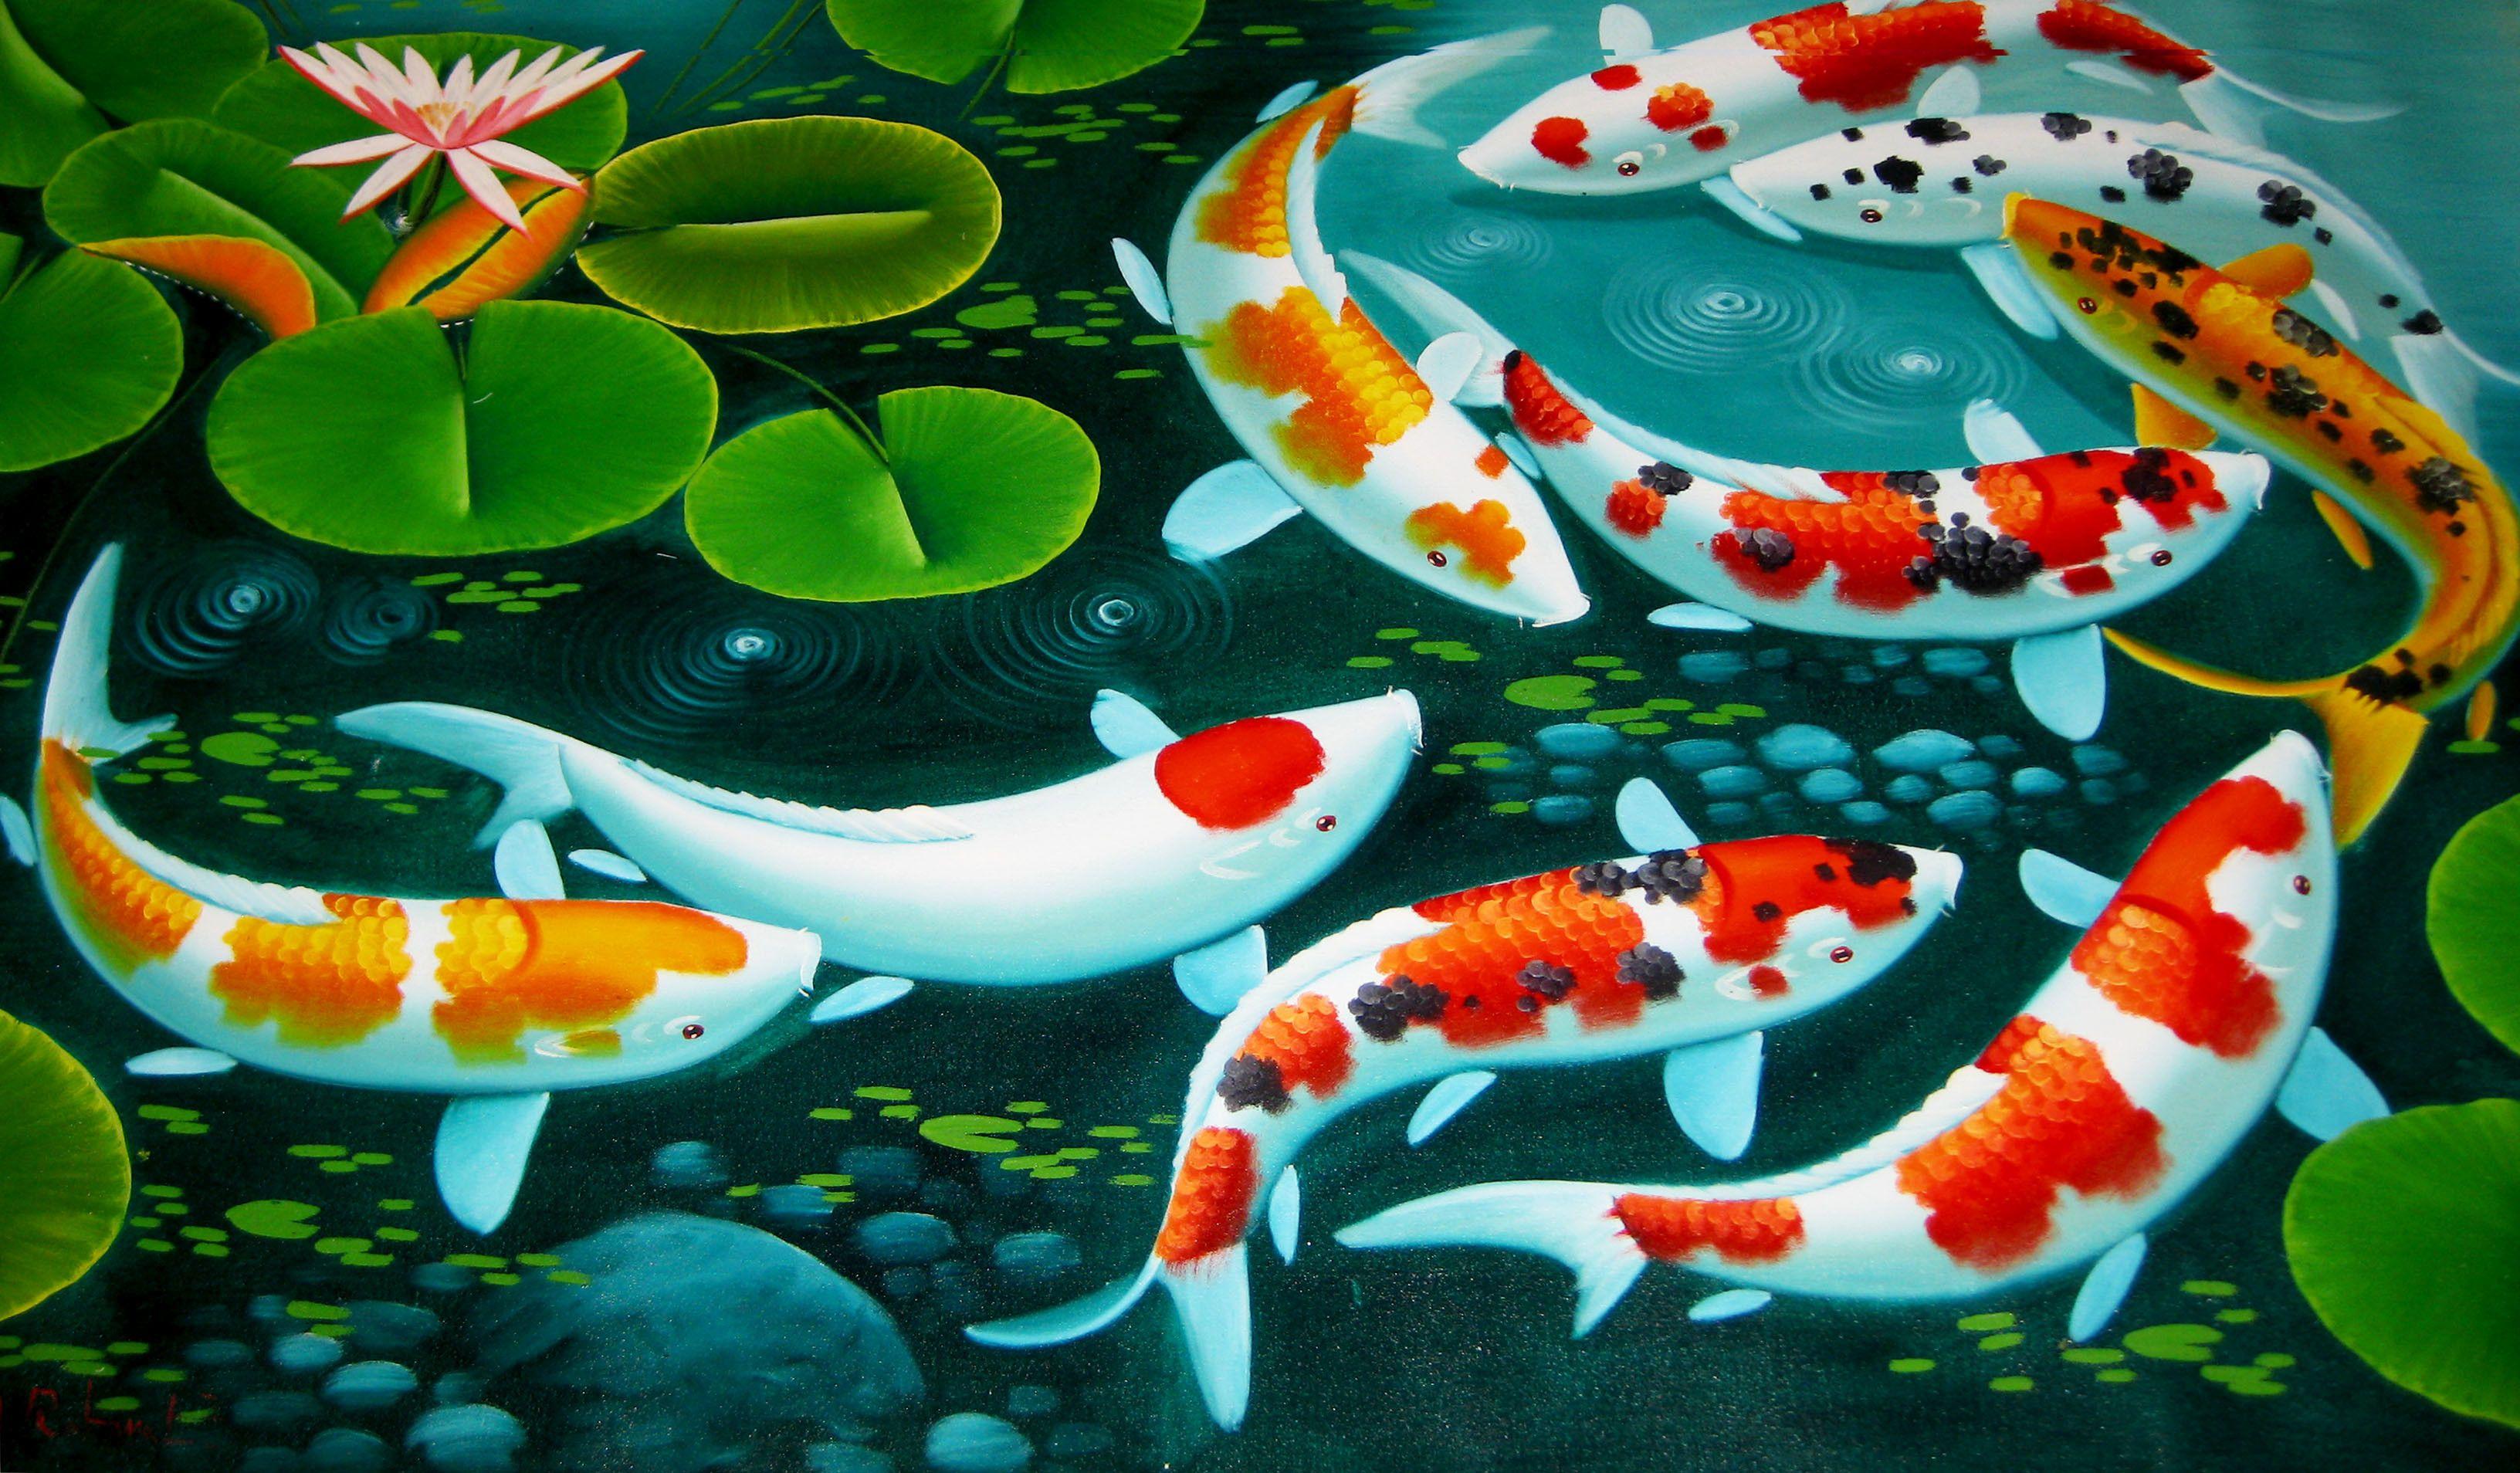 3264X1908 Koi Fish Desktop Wallpapers - Top Free Koi Fish Desktop Backgroun...